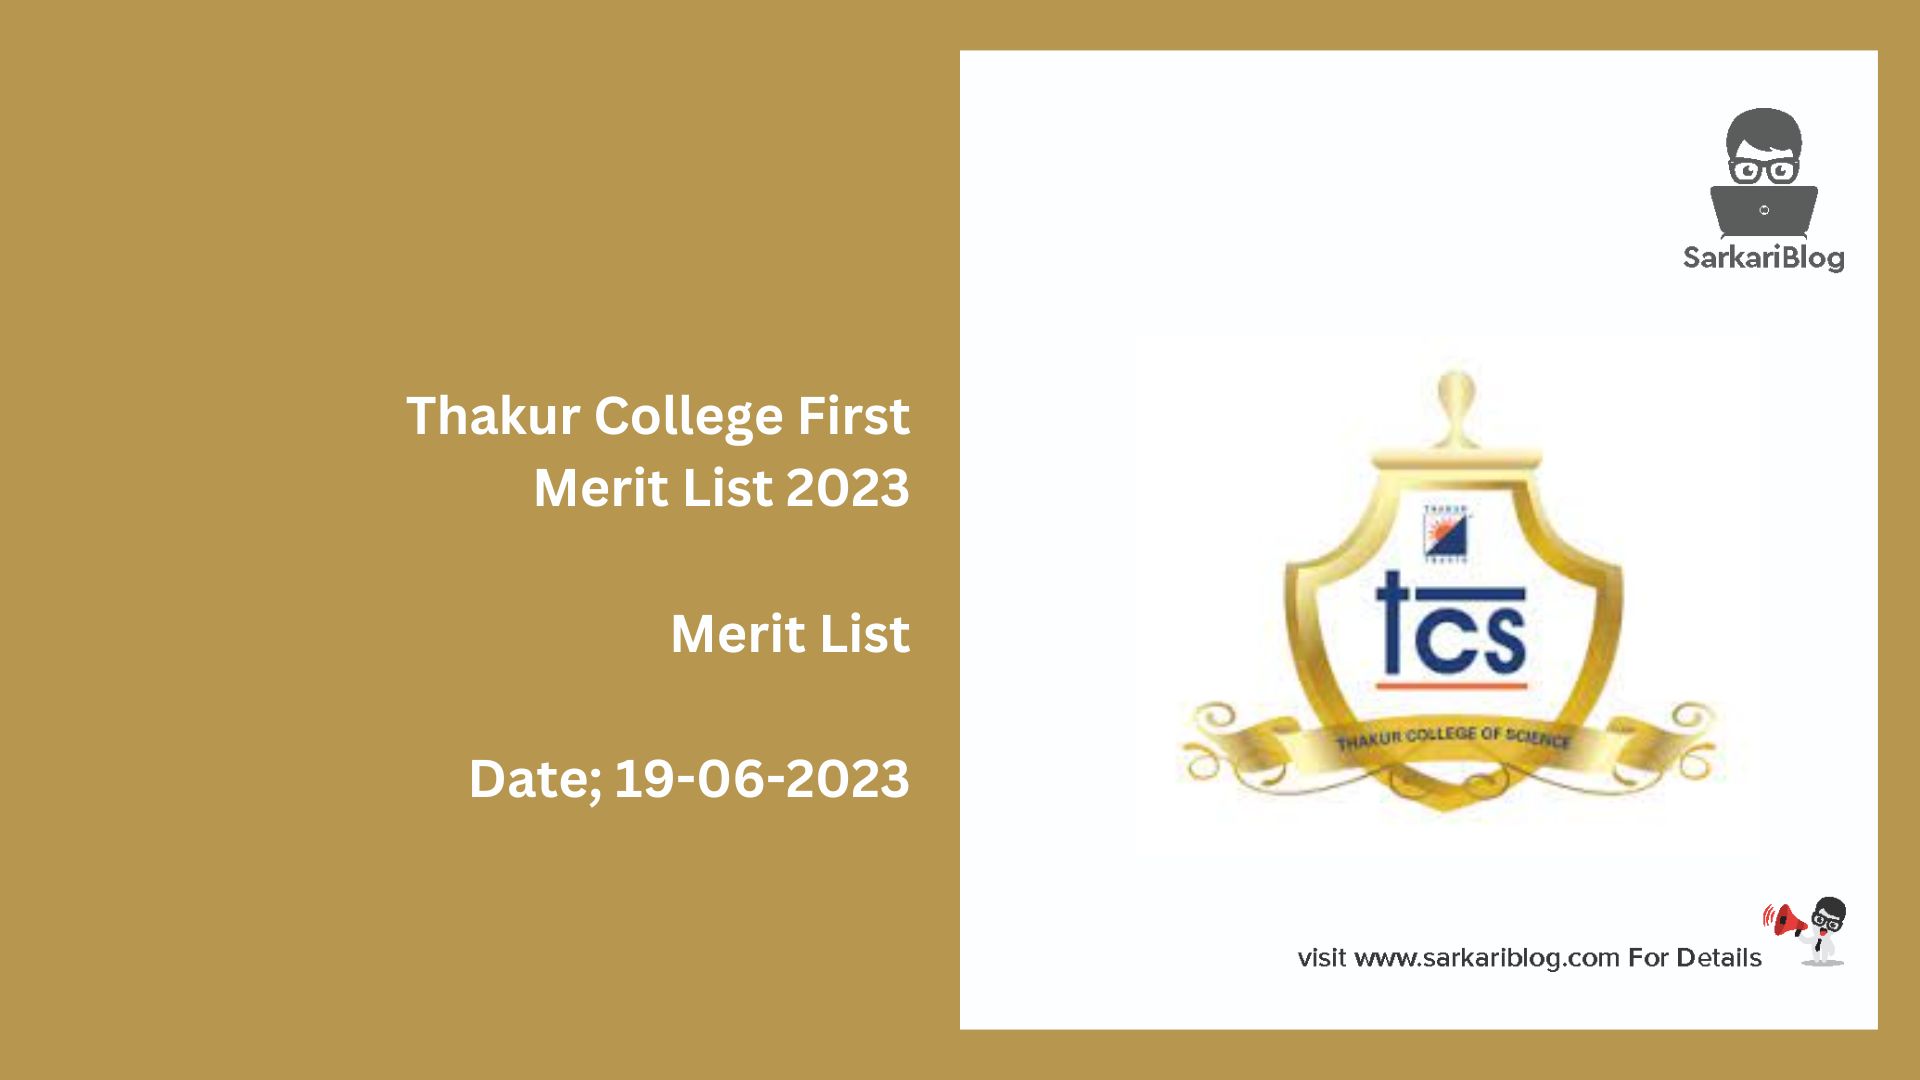 Thakur College First Merit List 2023